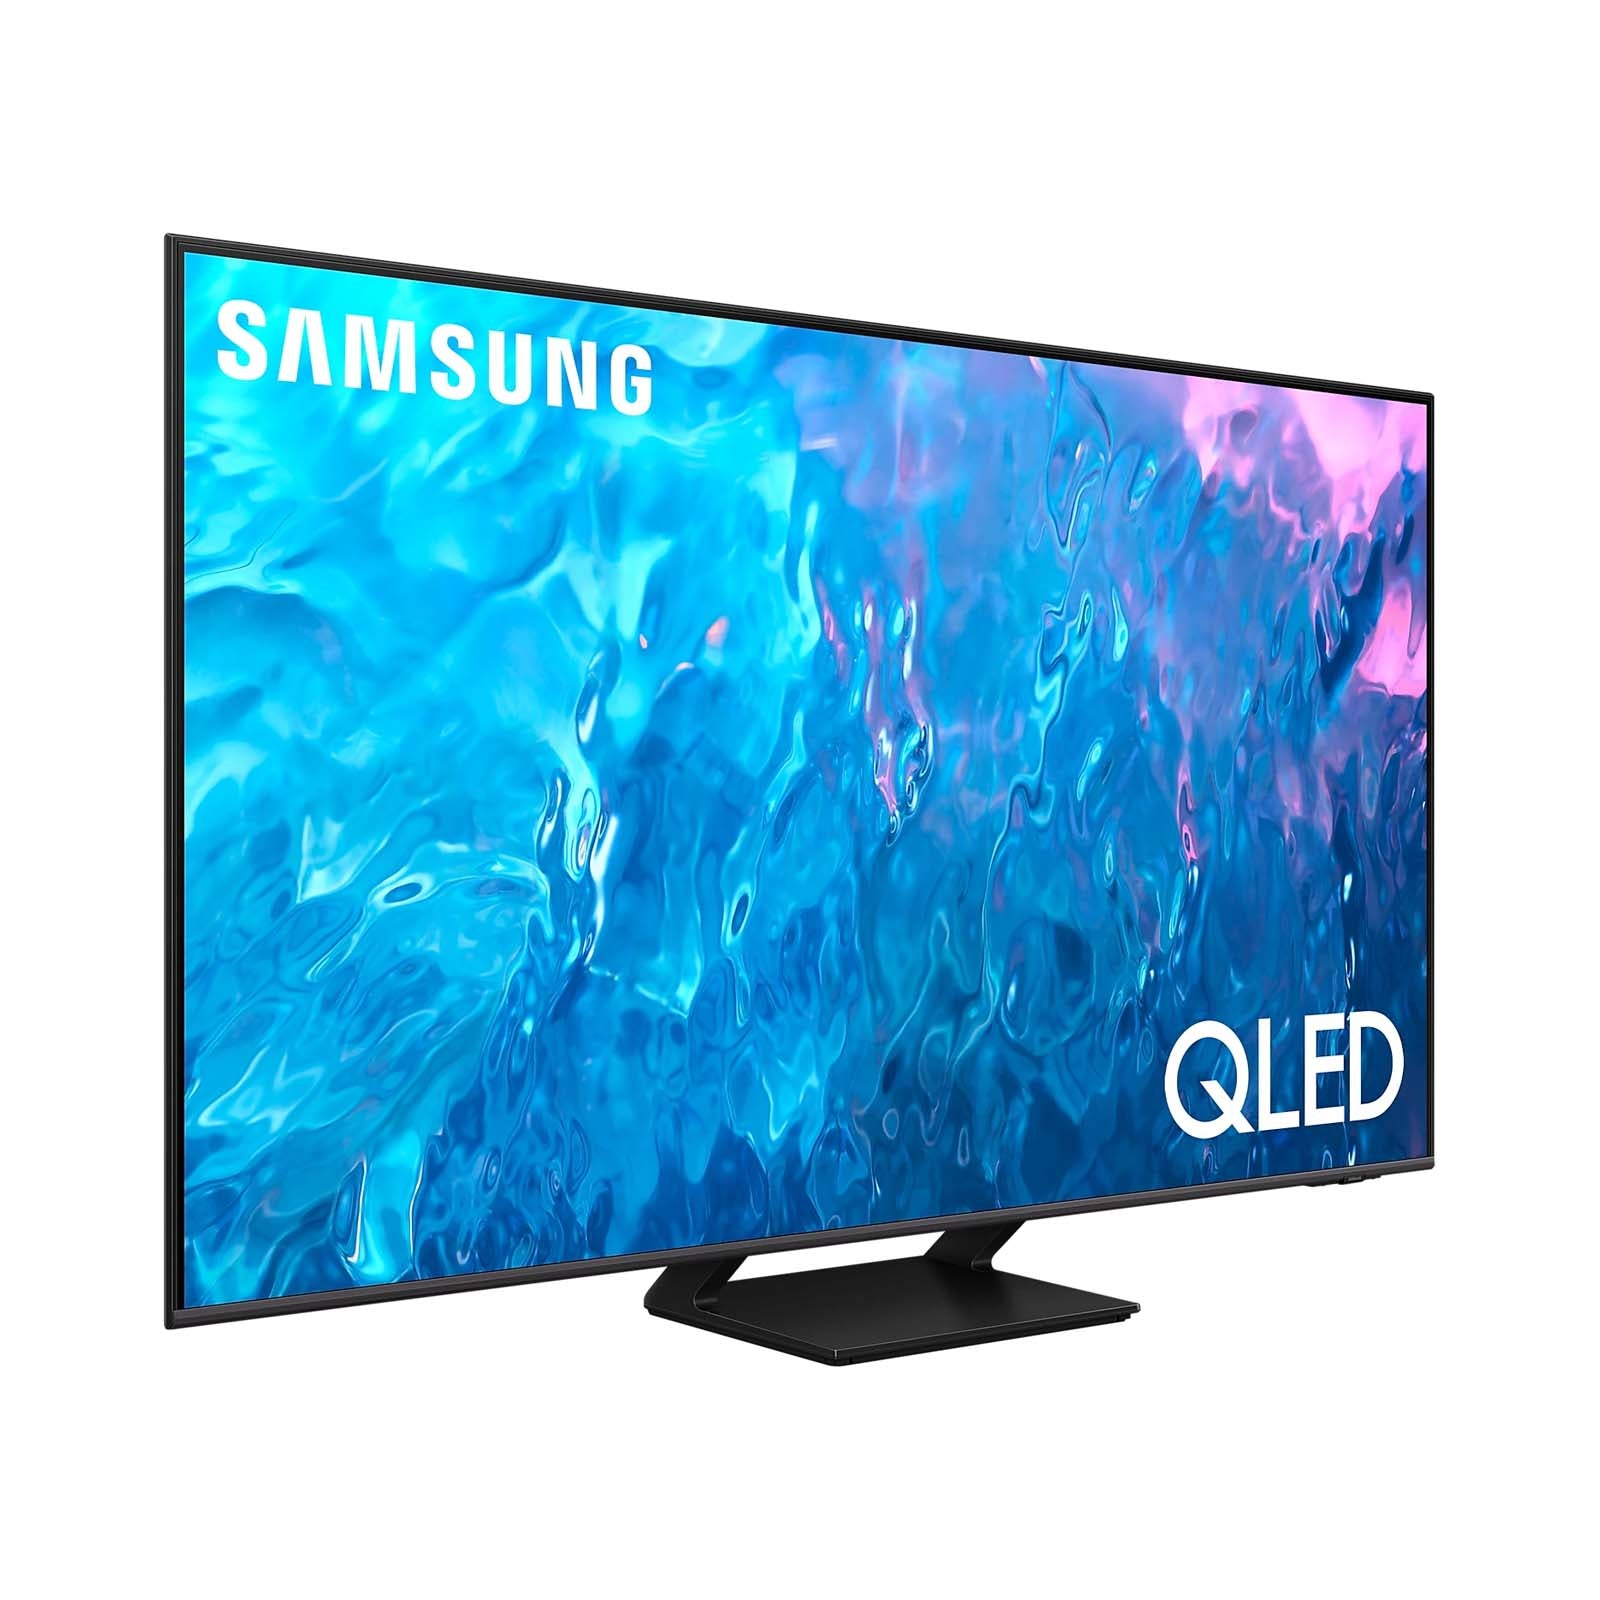 Pantalla Samsung 65 Pulgadas QLED Smart TV QN65Q90TDFXZX a precio